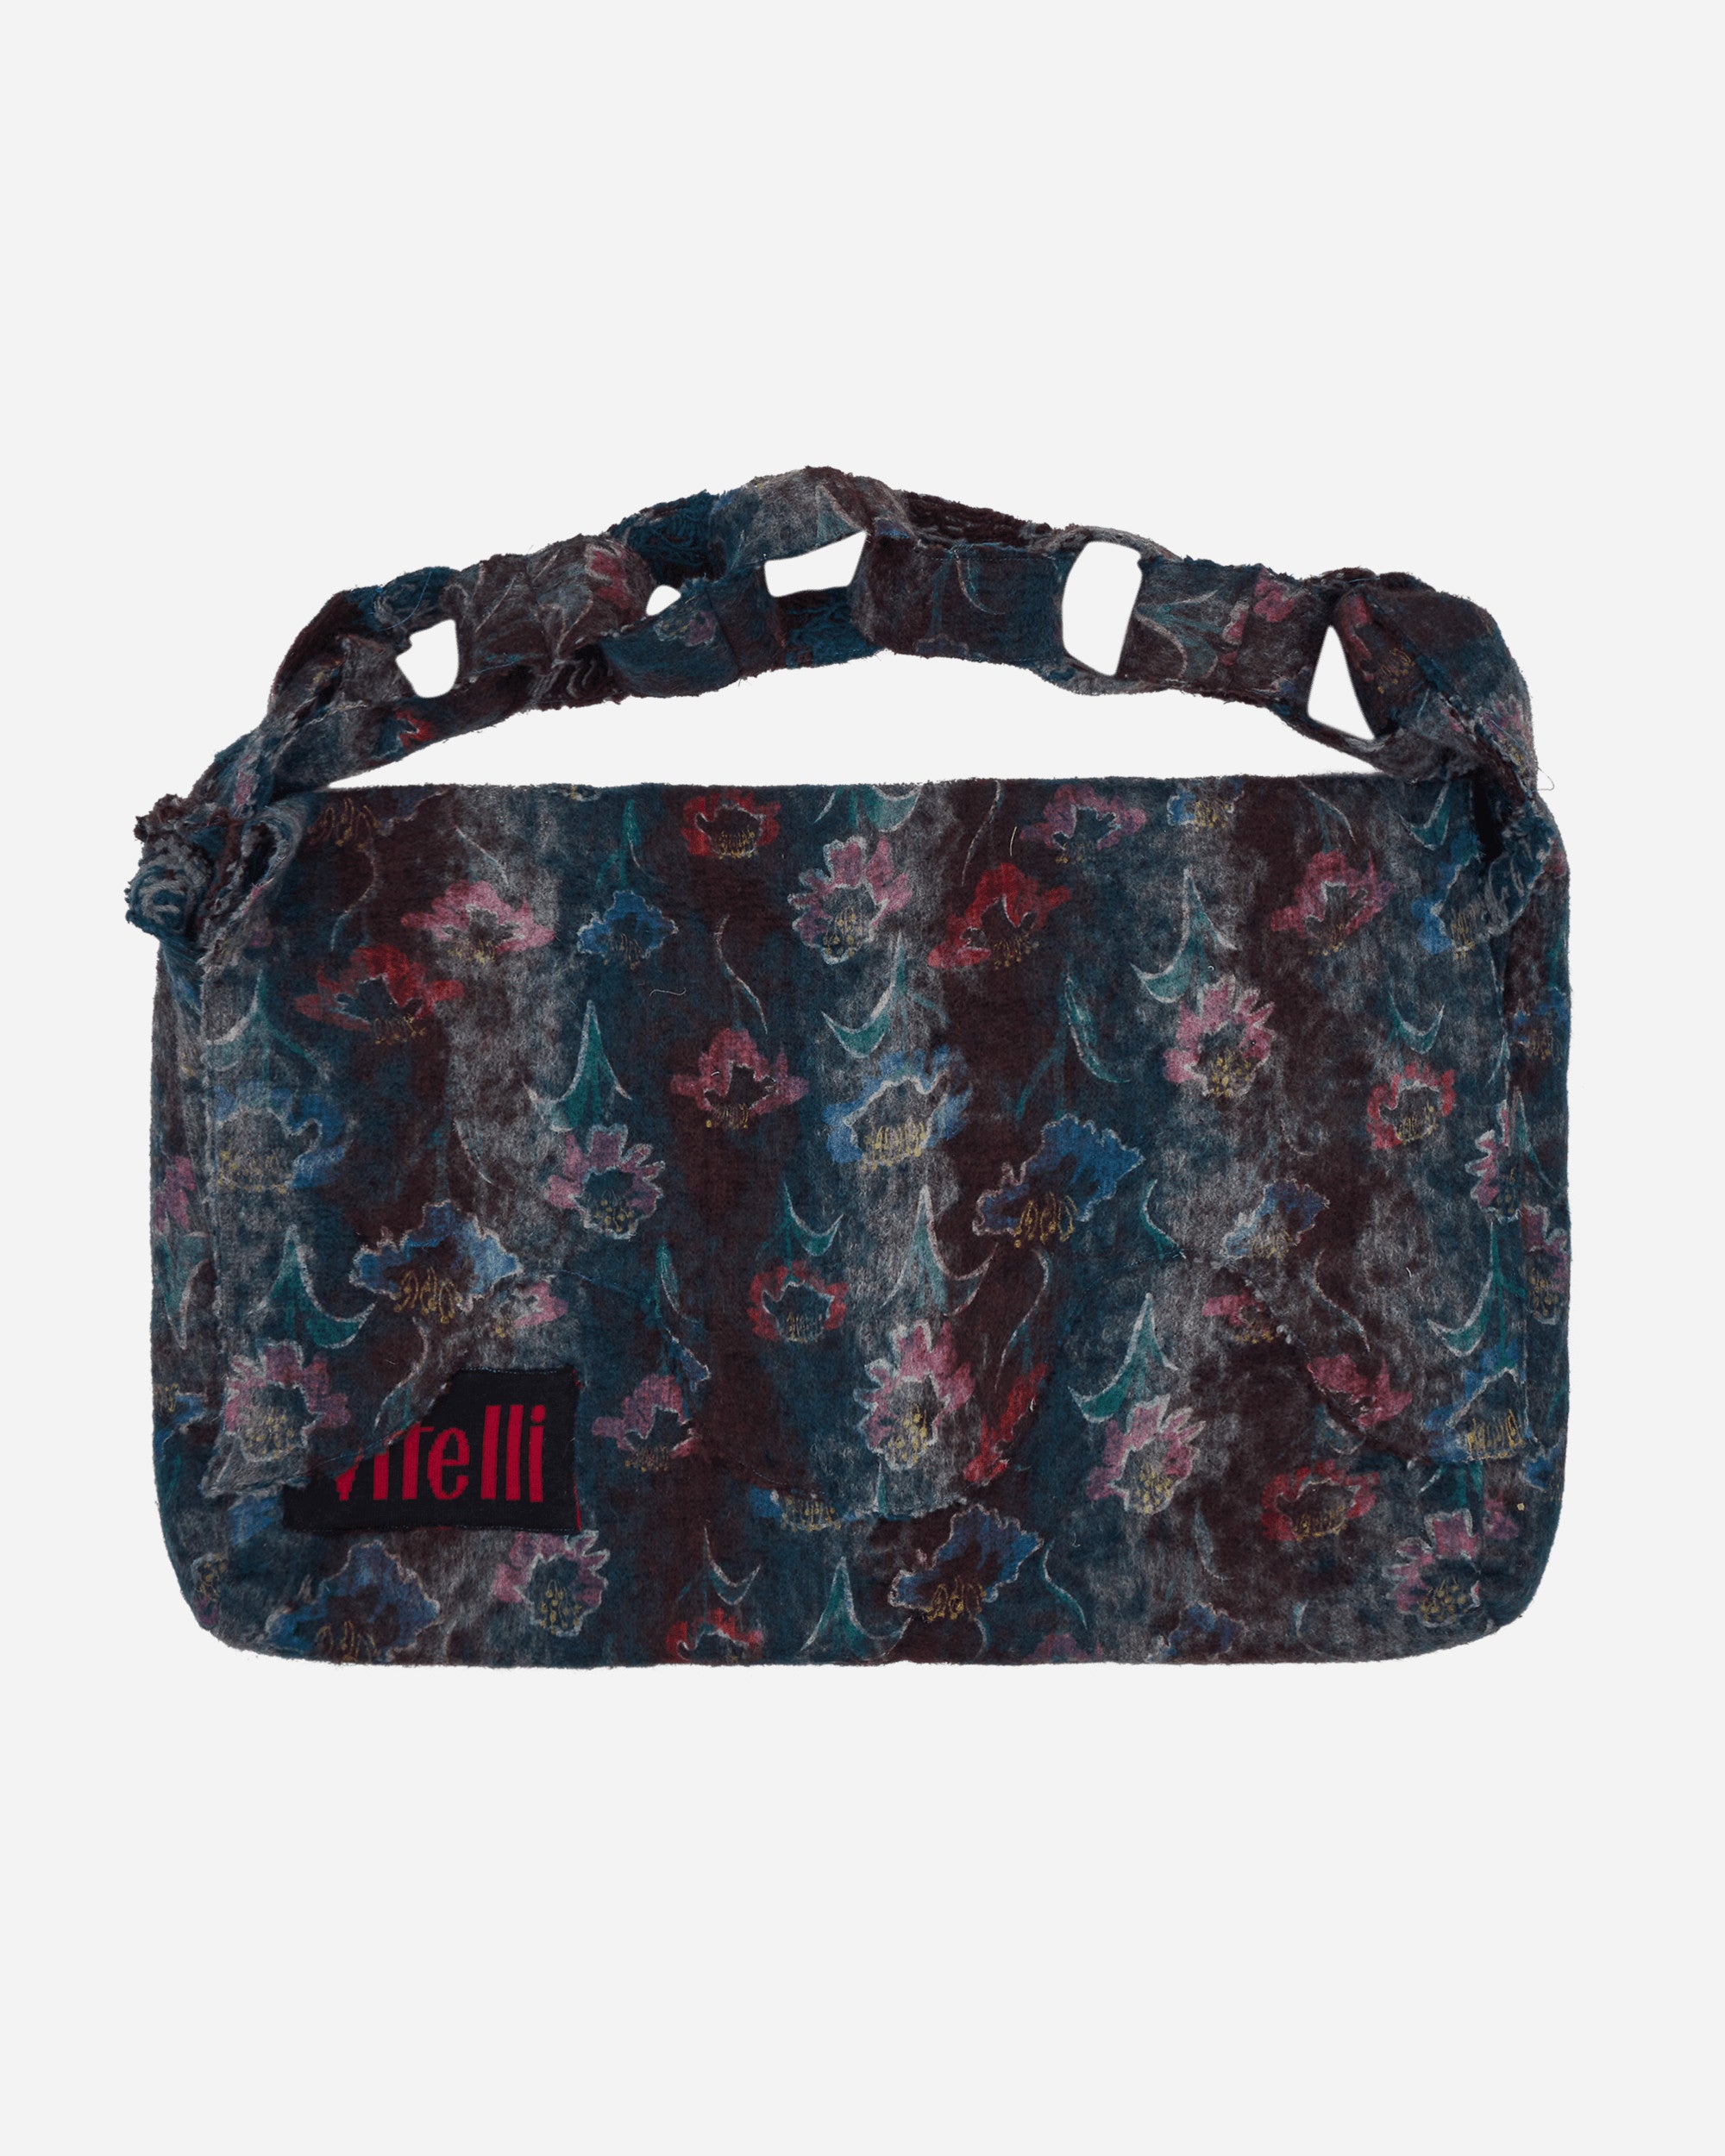 Vitelli Doomboh Messenger Bag Mixed Stripe/Floreal Bags and Backpacks Shoulder DMB-D032 MSK